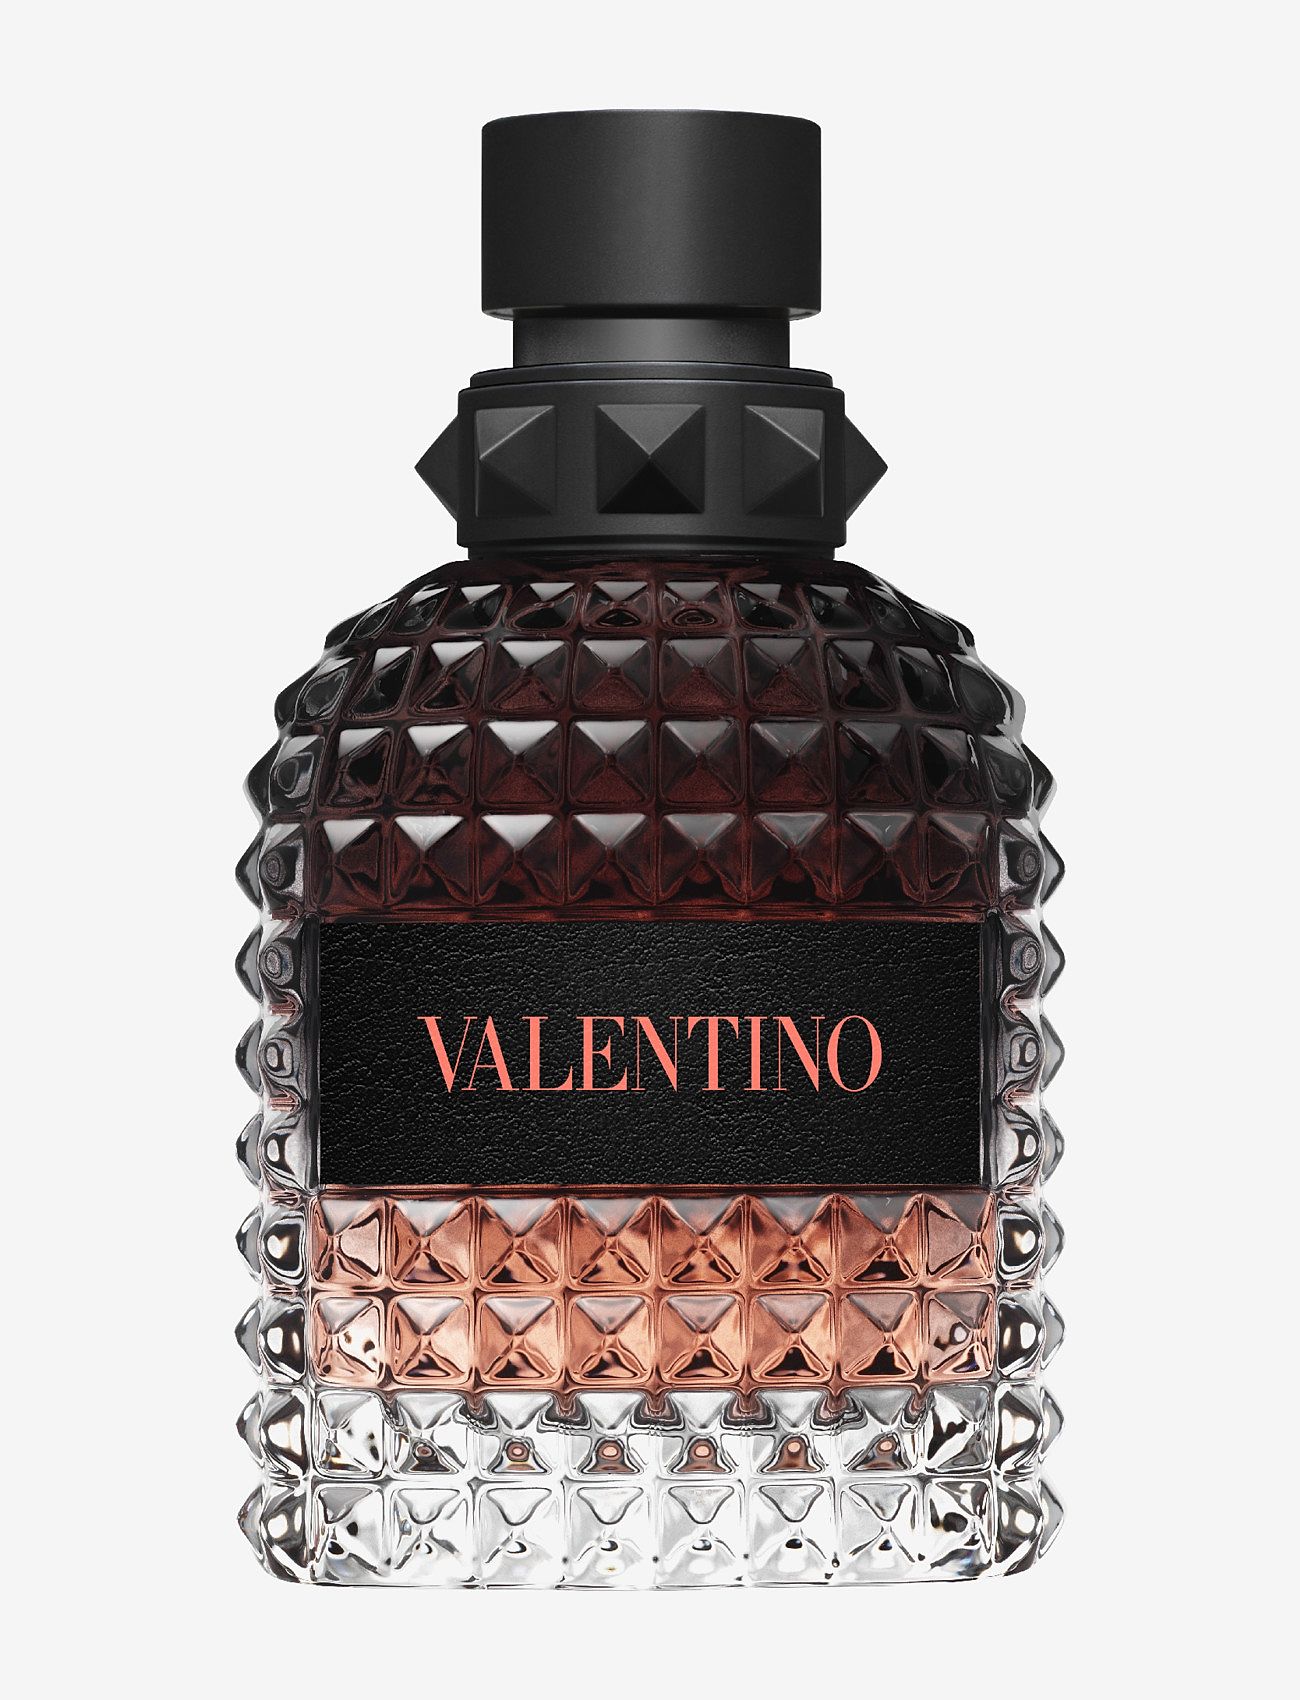 Valentino Fragrance - UOMO BORN IN ROMA CORAL FANTASY Eau de Toilette - eau de parfum - clear - 1